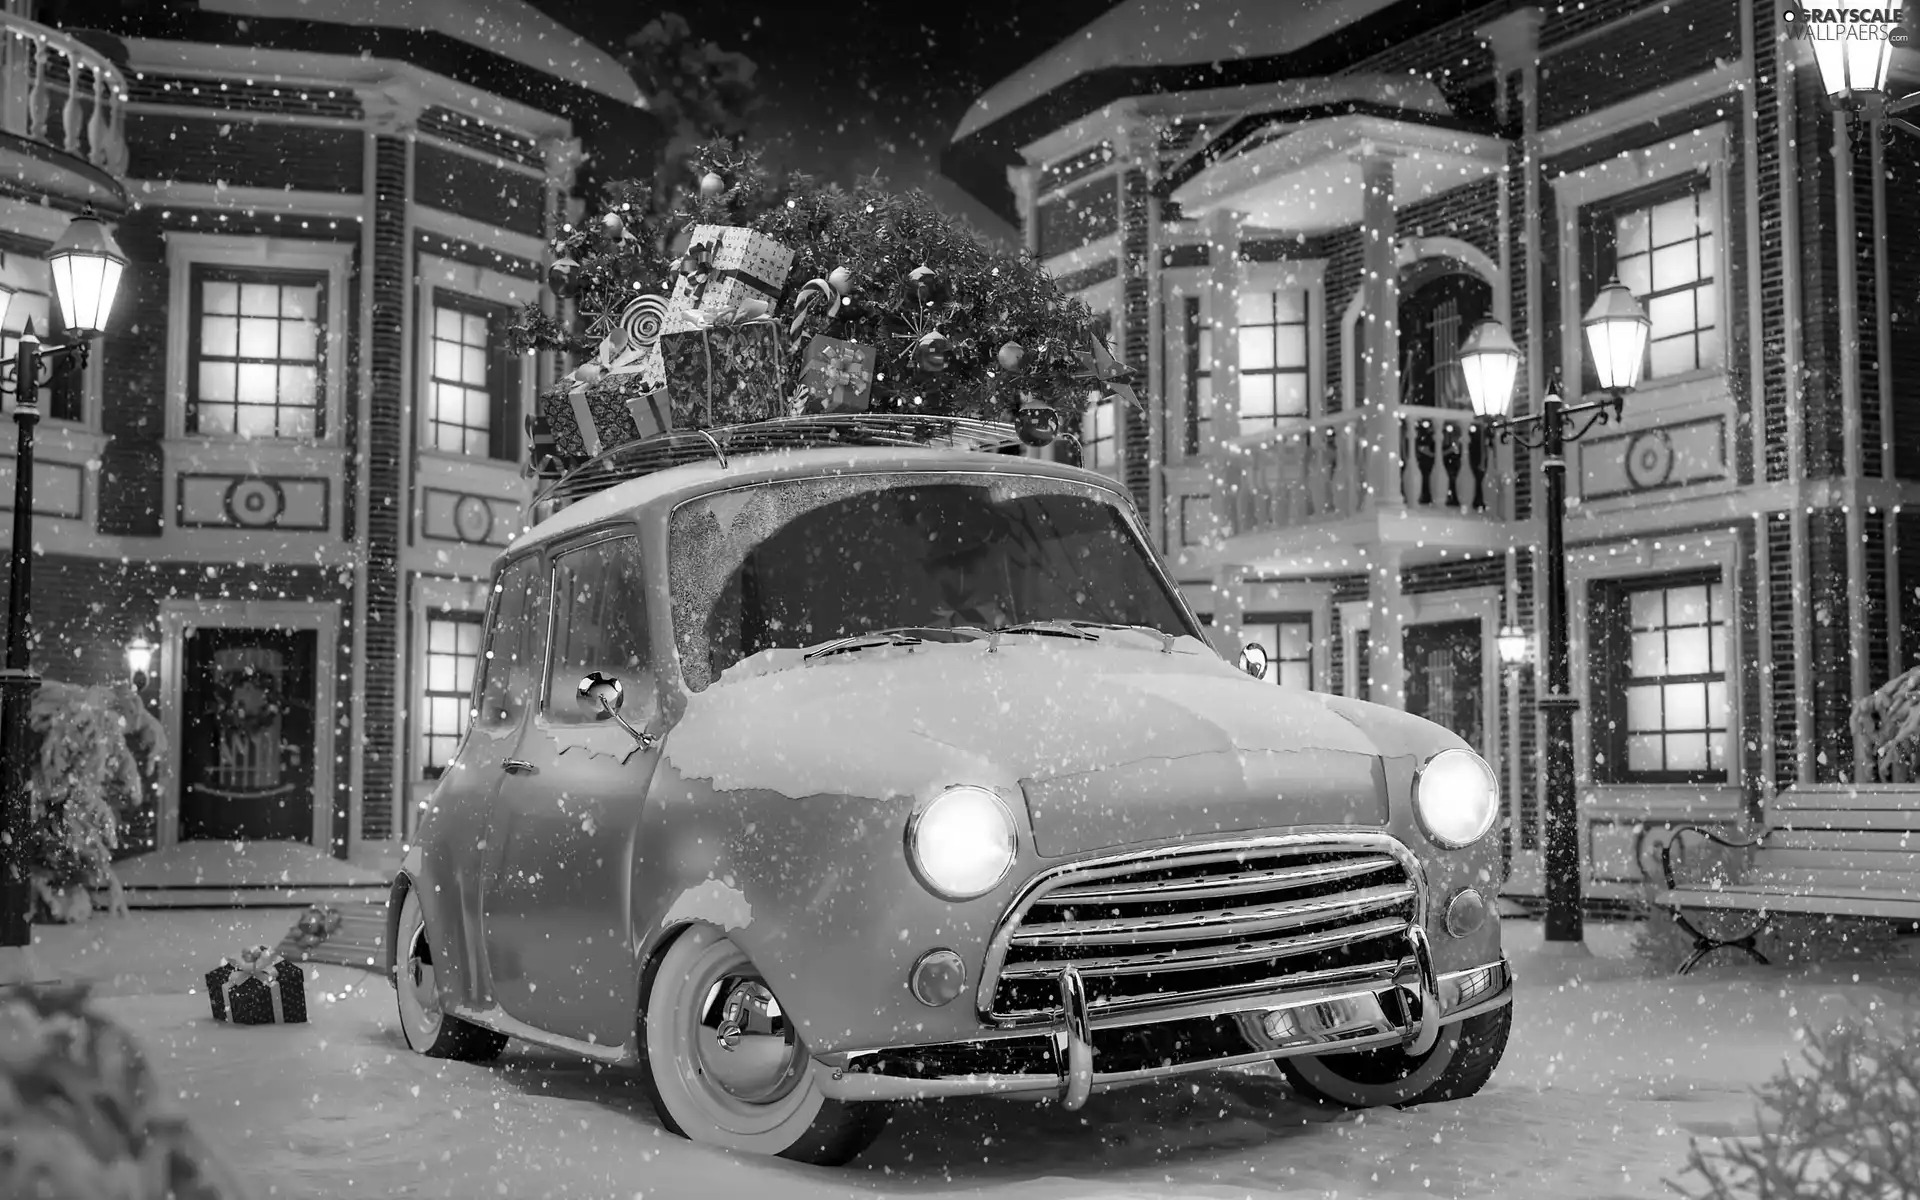 Automobile, Houses, christmas tree, Street, gifts, snow, winter, lanterns